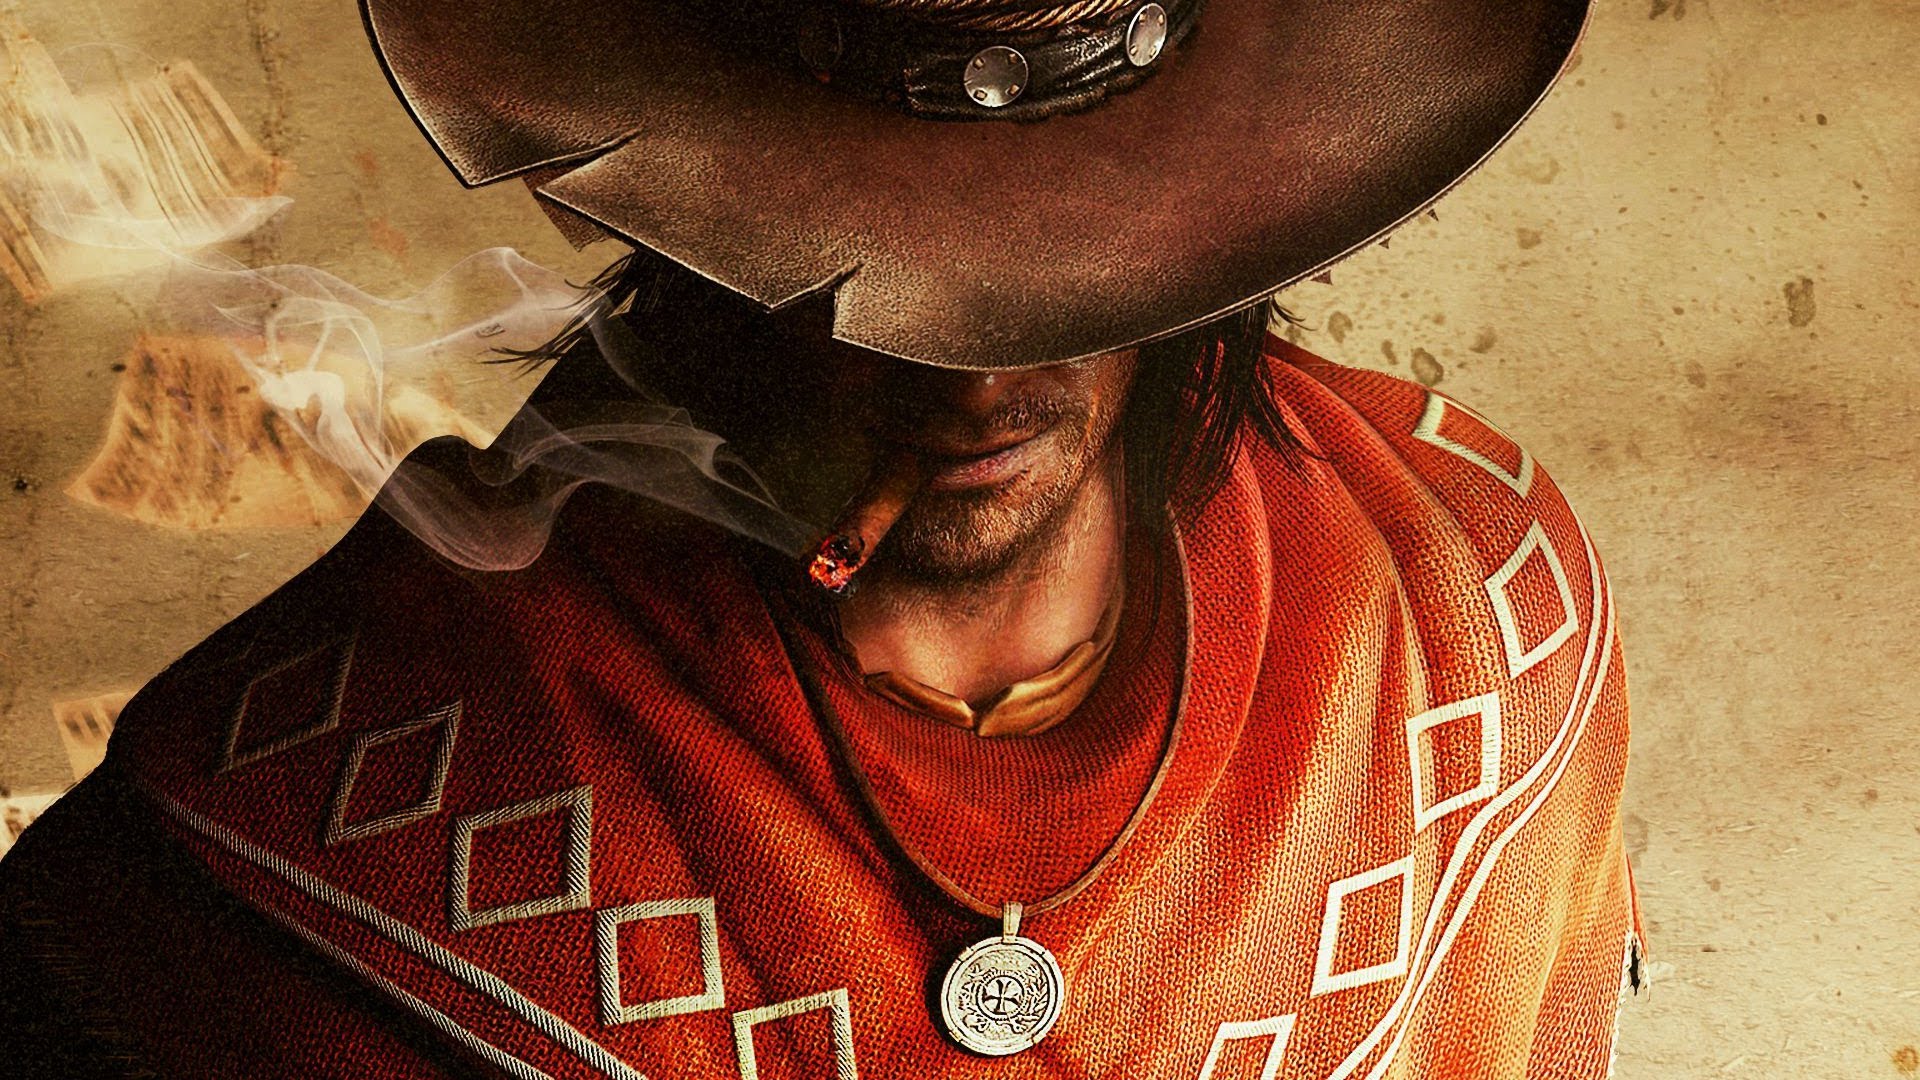 Amazing Call Of Juarez: Gunslinger Pictures & Backgrounds